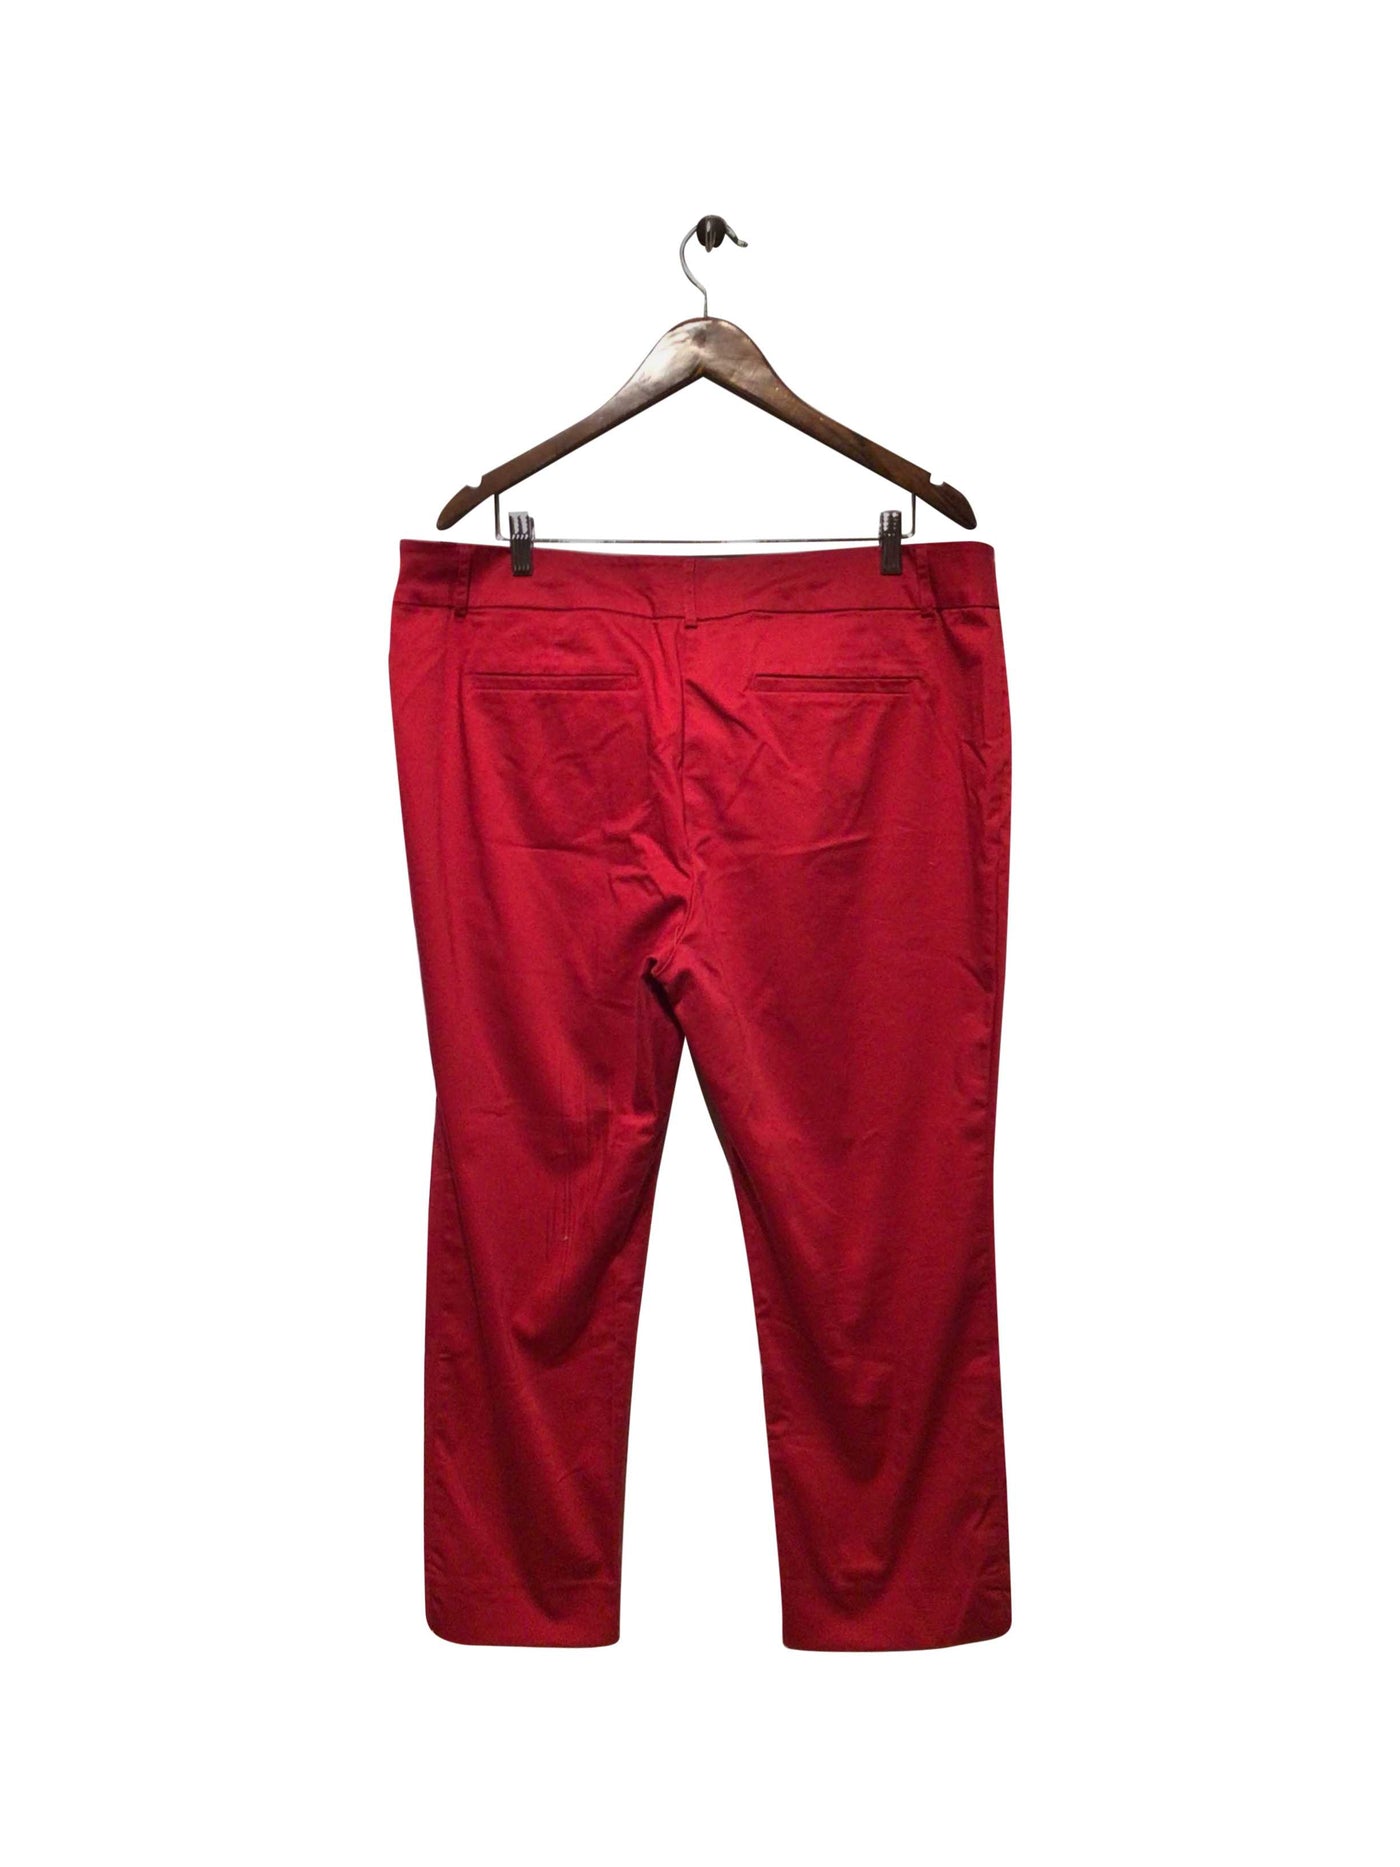 RICKI'S Regular fit Pant in Red  -  16  14.90 Koop